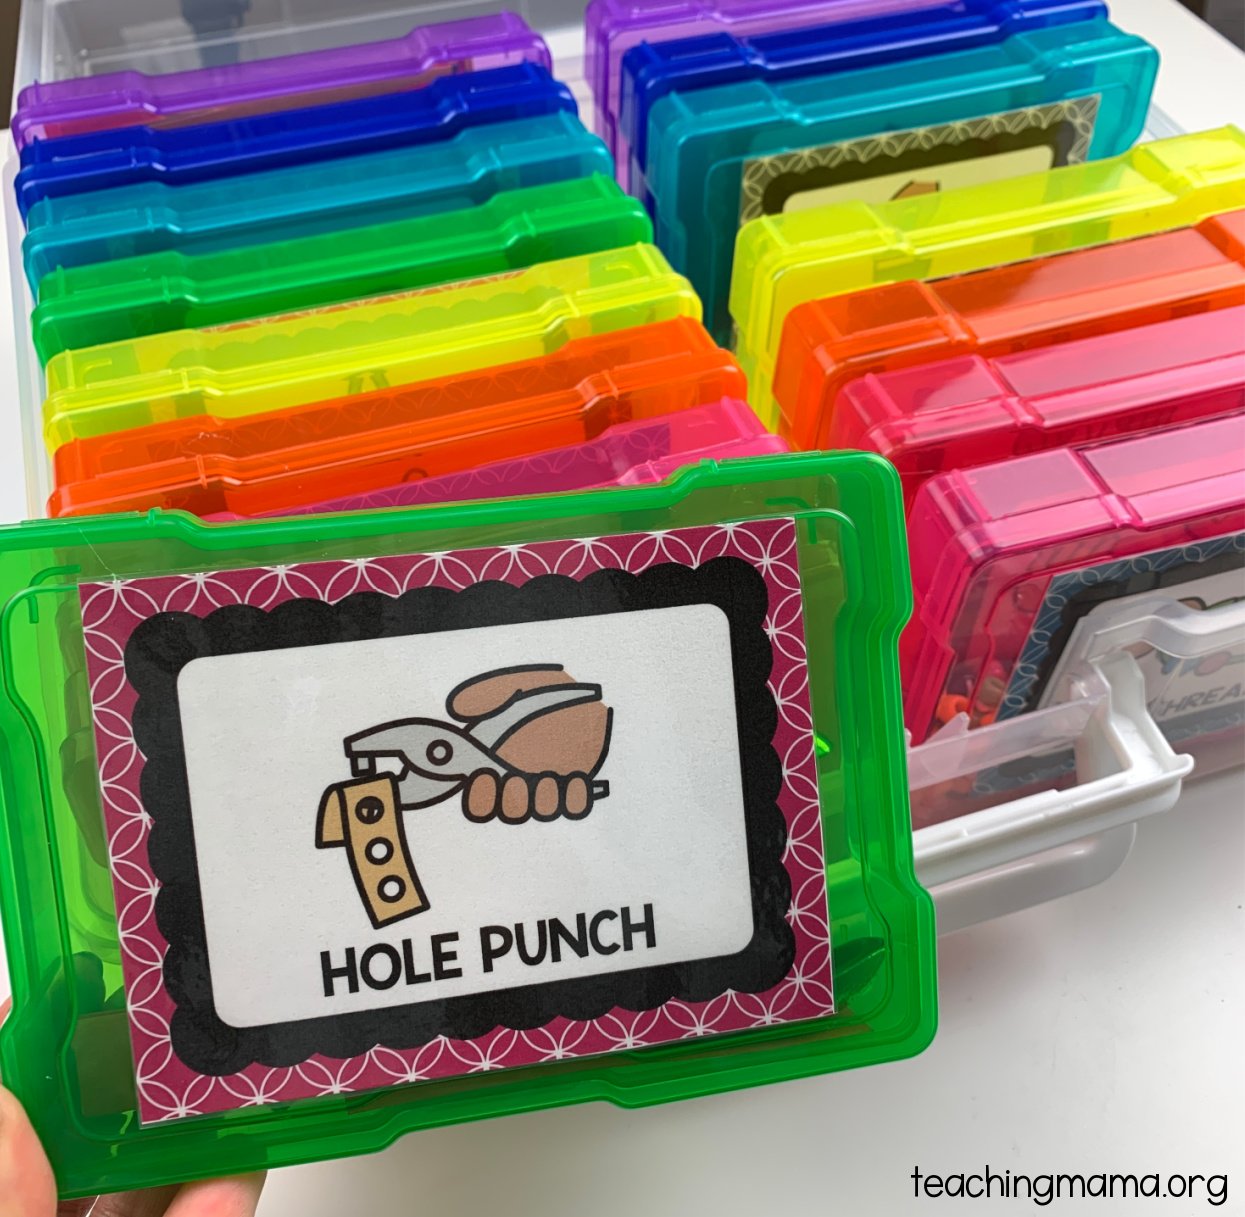 Hole Punch It Shapes - Top Teacher